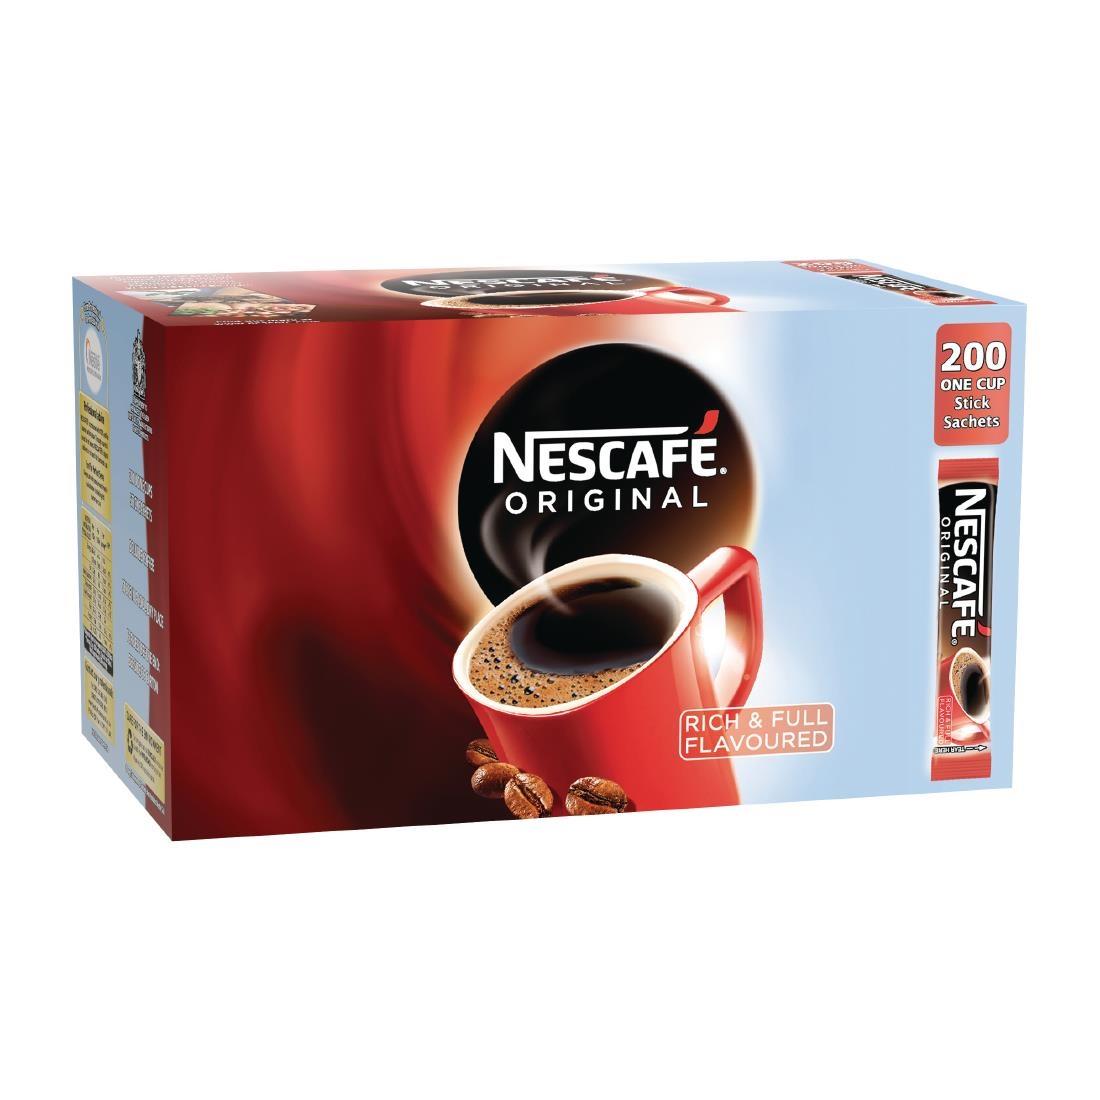 Nescafe Coffee Original Stick (Pack of 200) - DN806  - 2